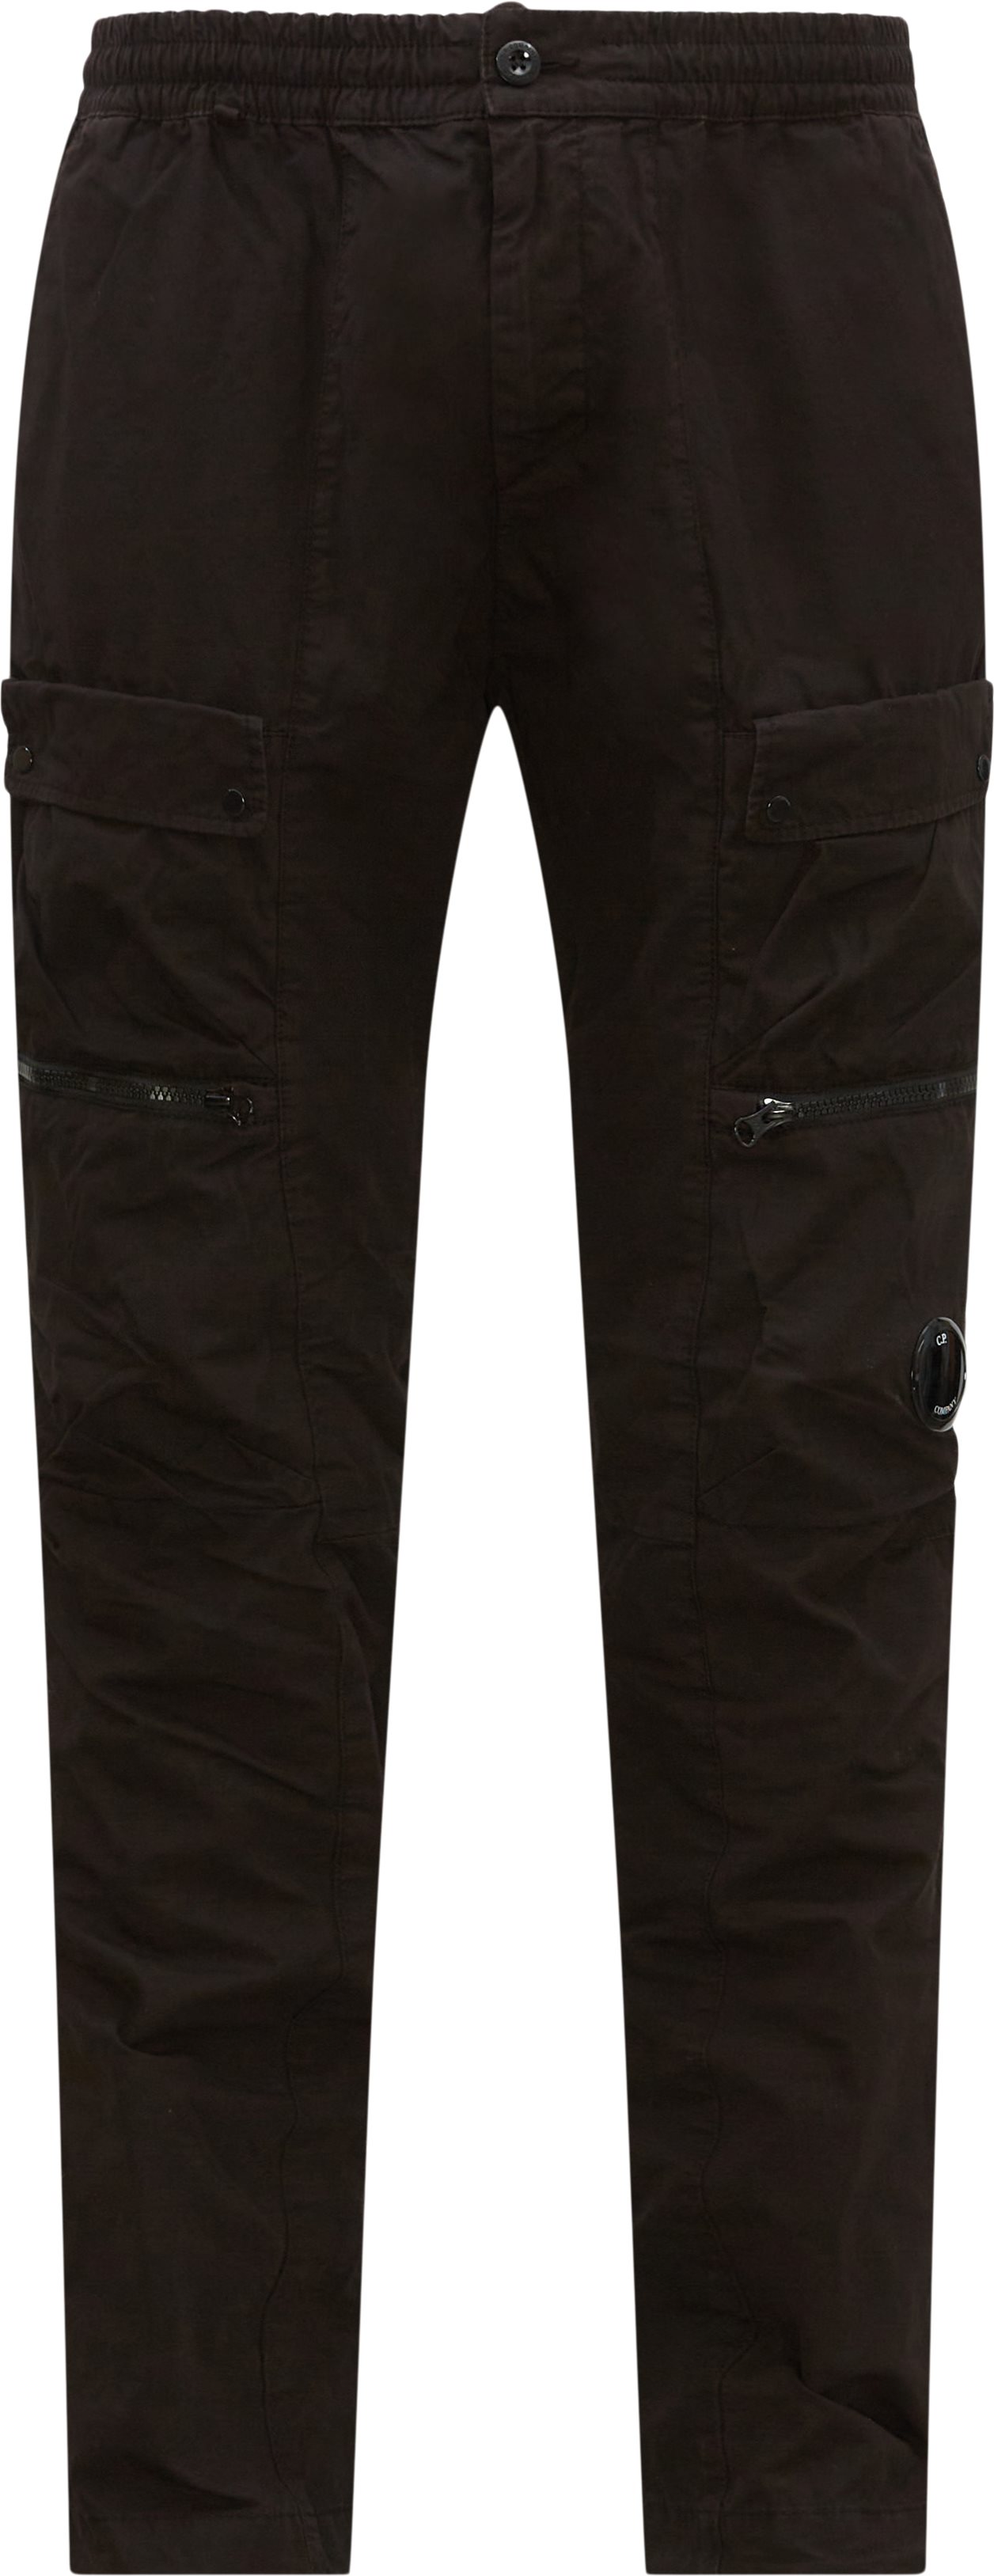 C.P. Company Trousers PA160A 6475G Black